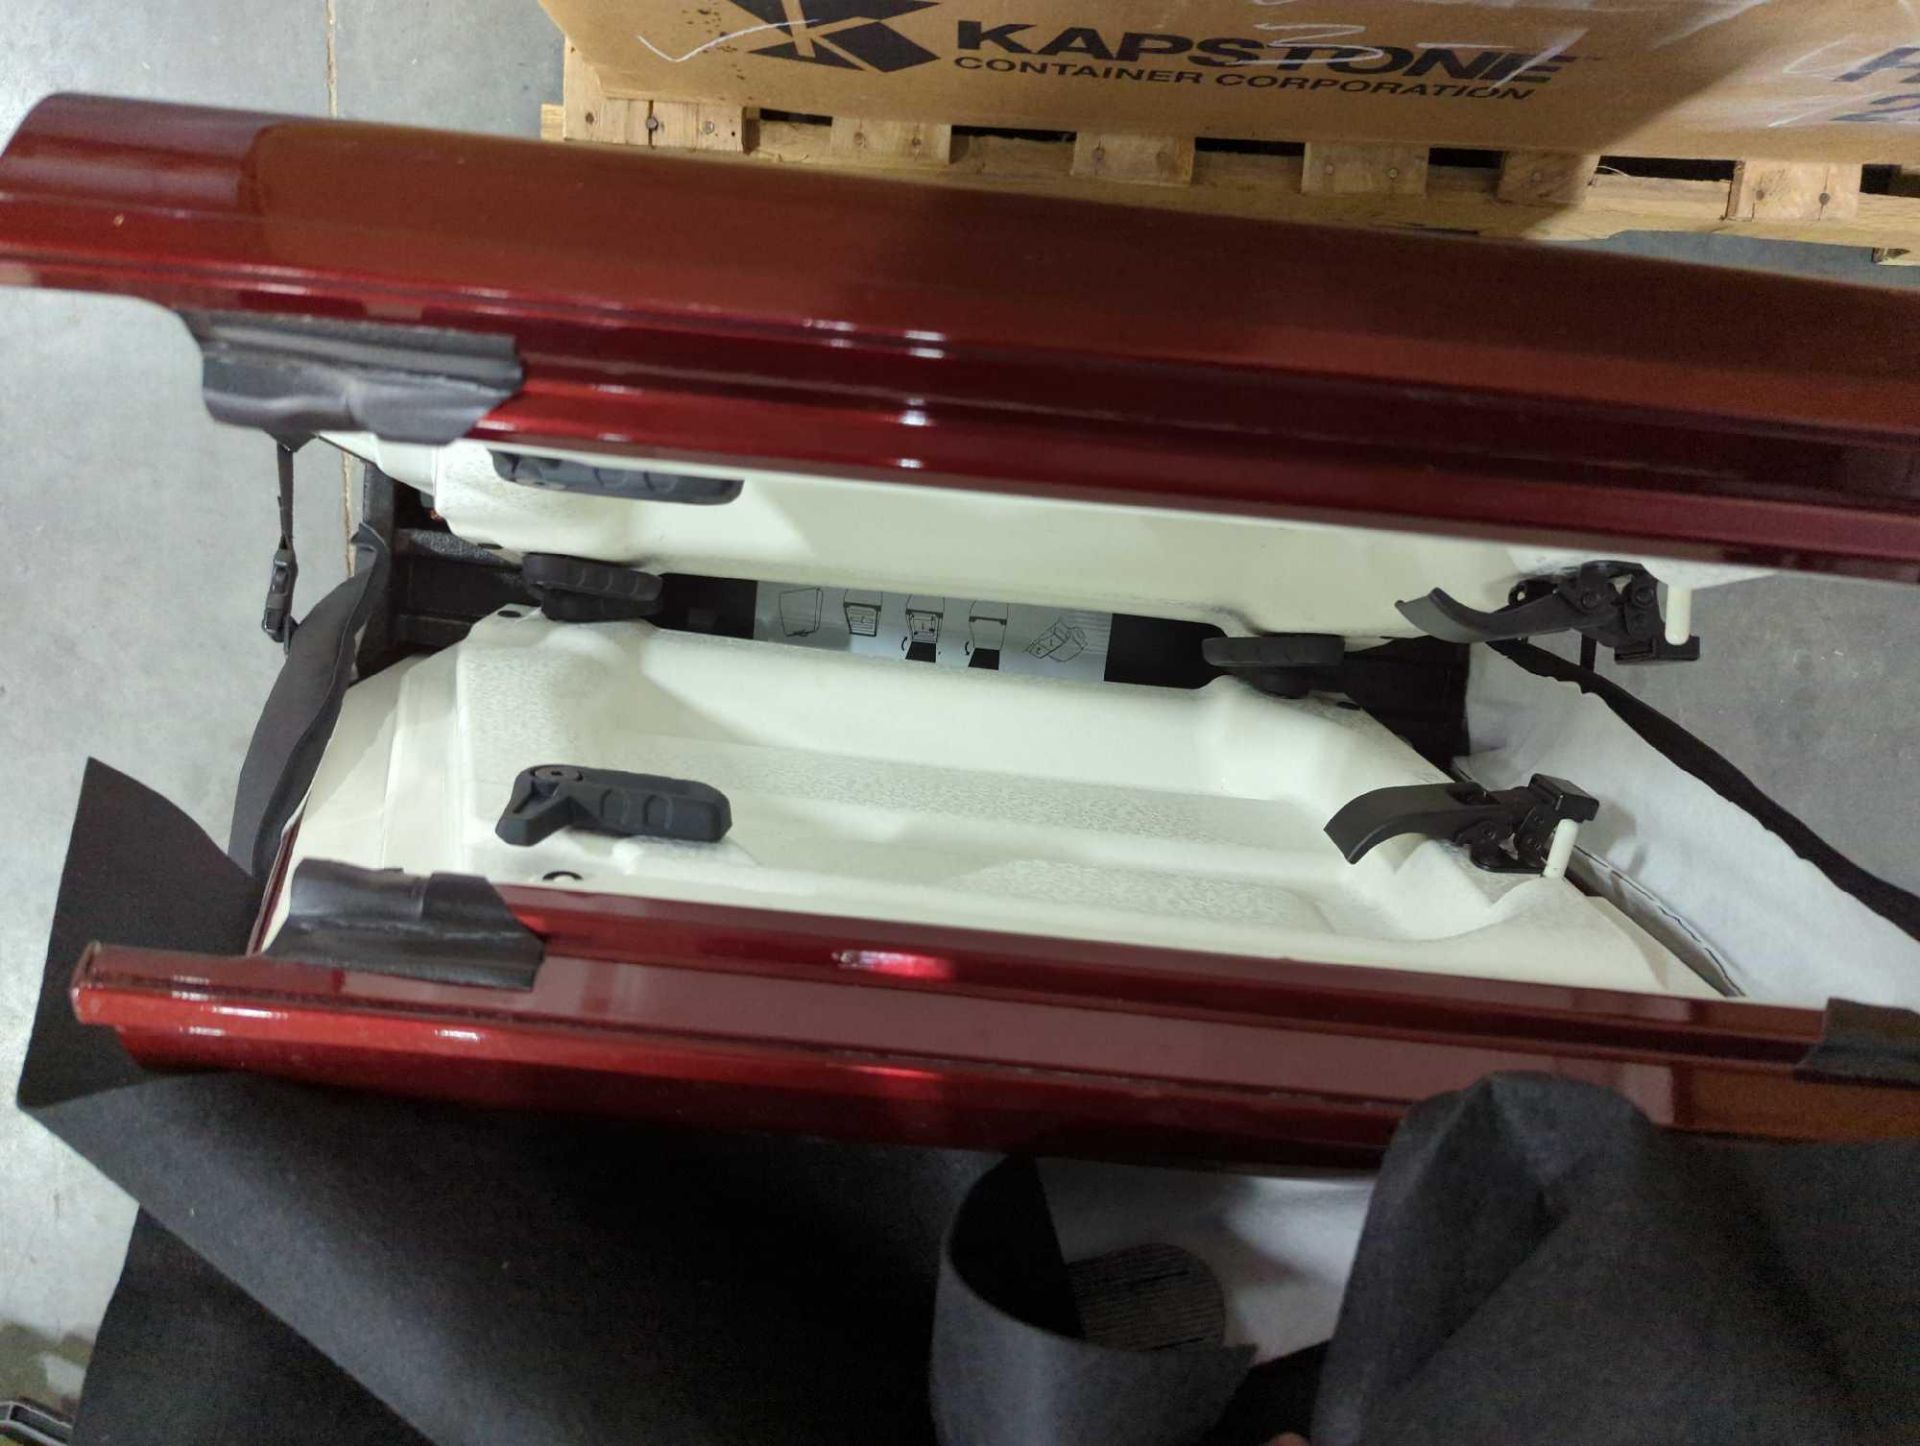 HP BCLAA-1508 printer, Millard sleep, Epson canvas satin, hard top to a jeep in wood box - Image 10 of 10